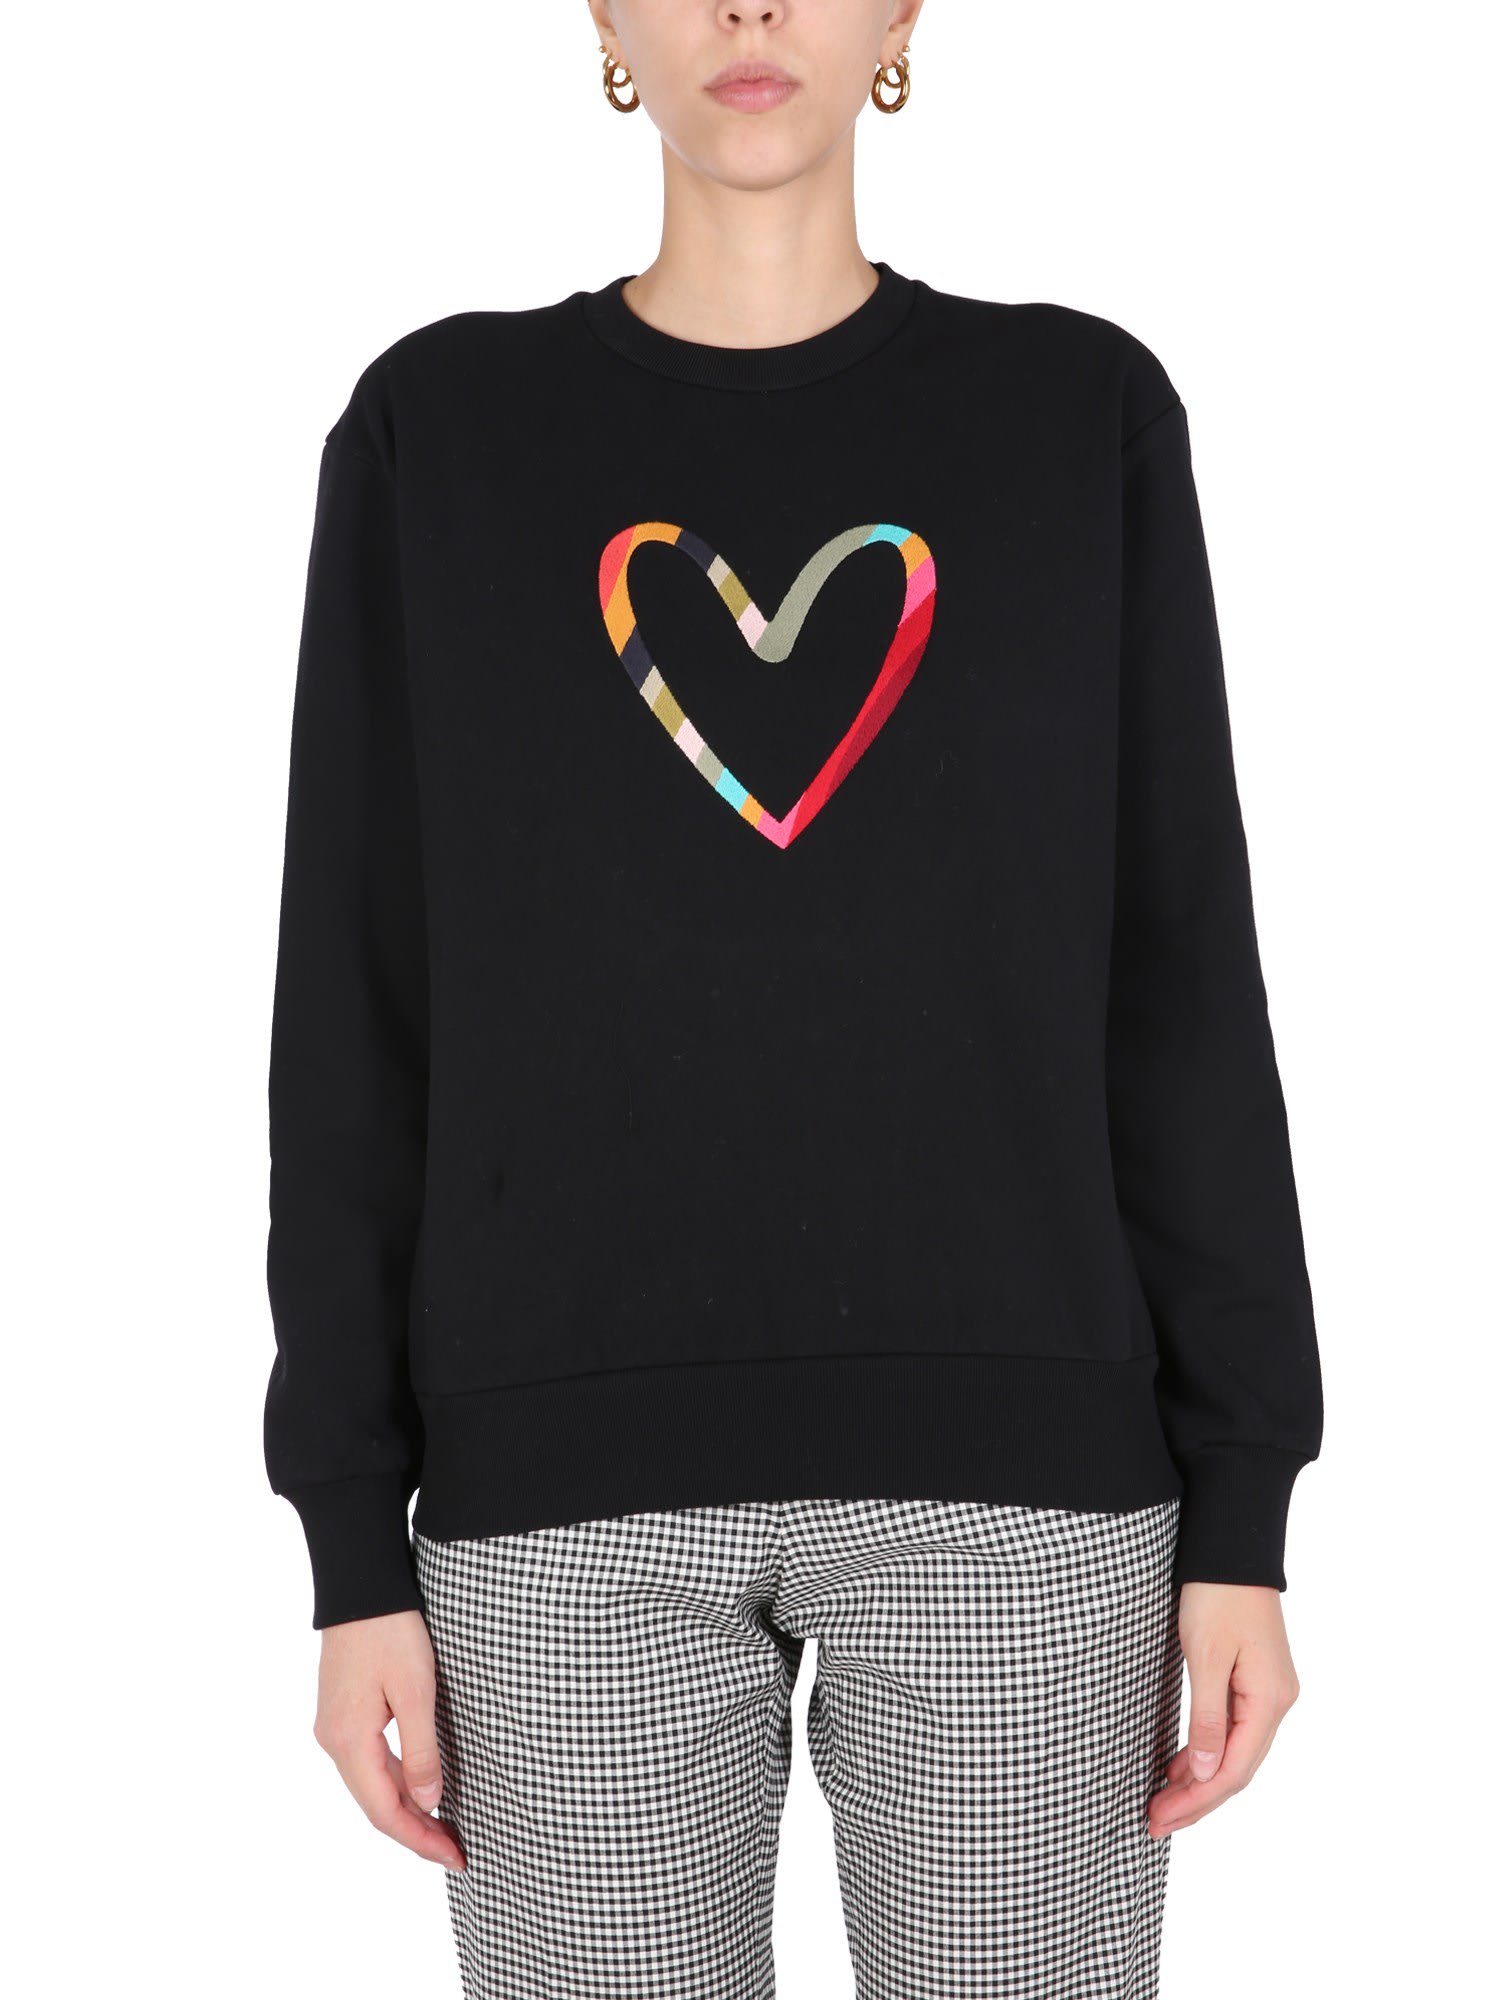 Paul Smith Swirl Heart Print Sweatshirt